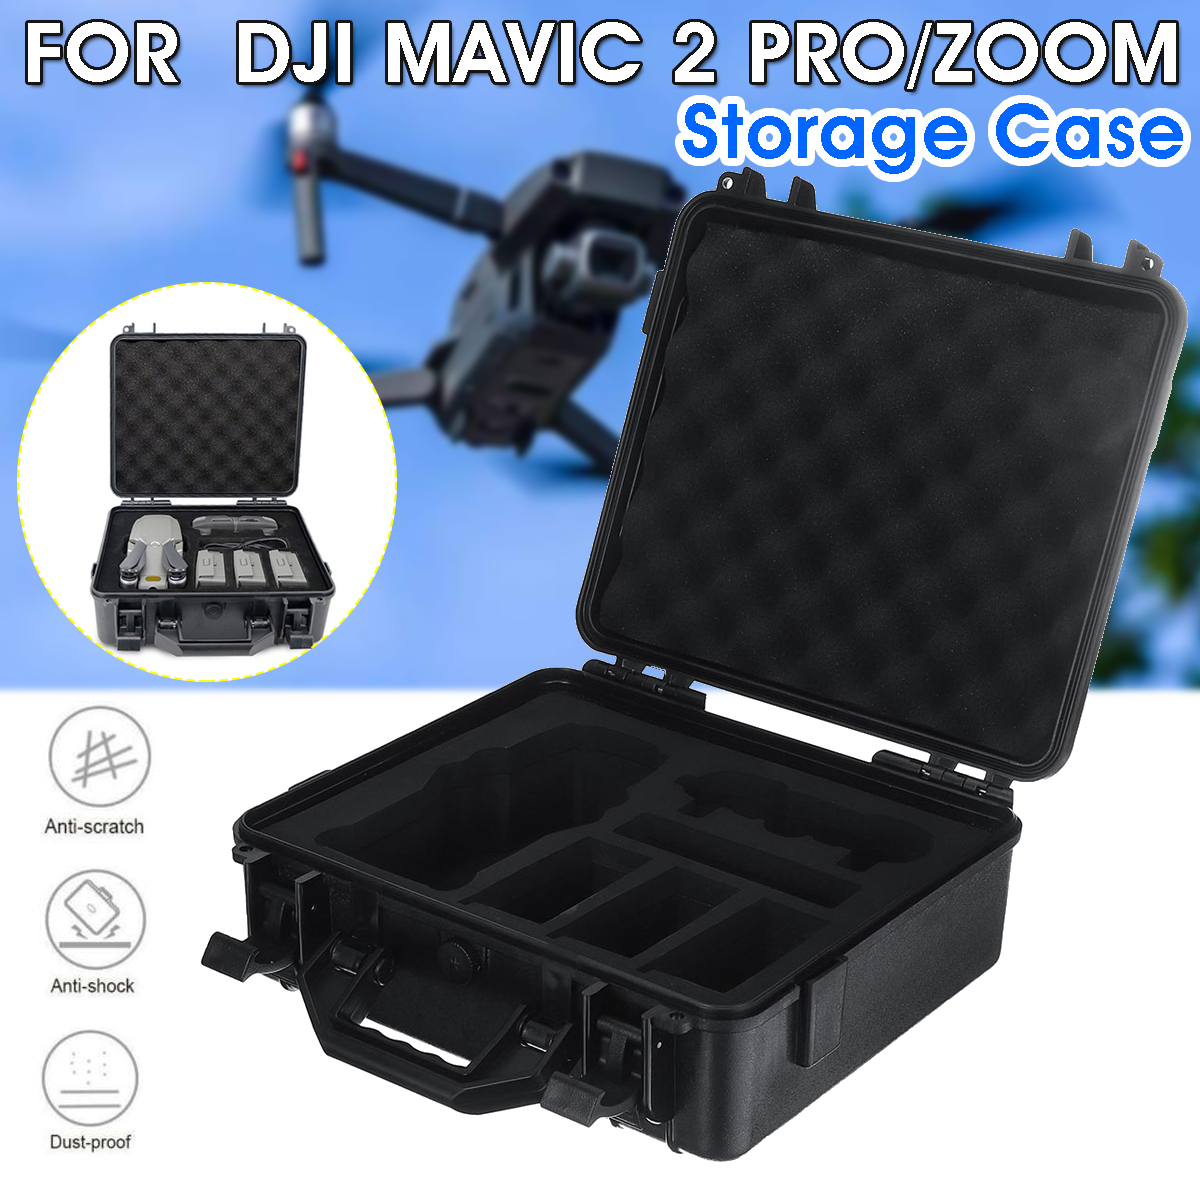 Shockproof-Portable-Carry-Hard-Case-Storage-Bag-Black-For-DJI-Mavic-2-Pro--Zoom-1780566-1